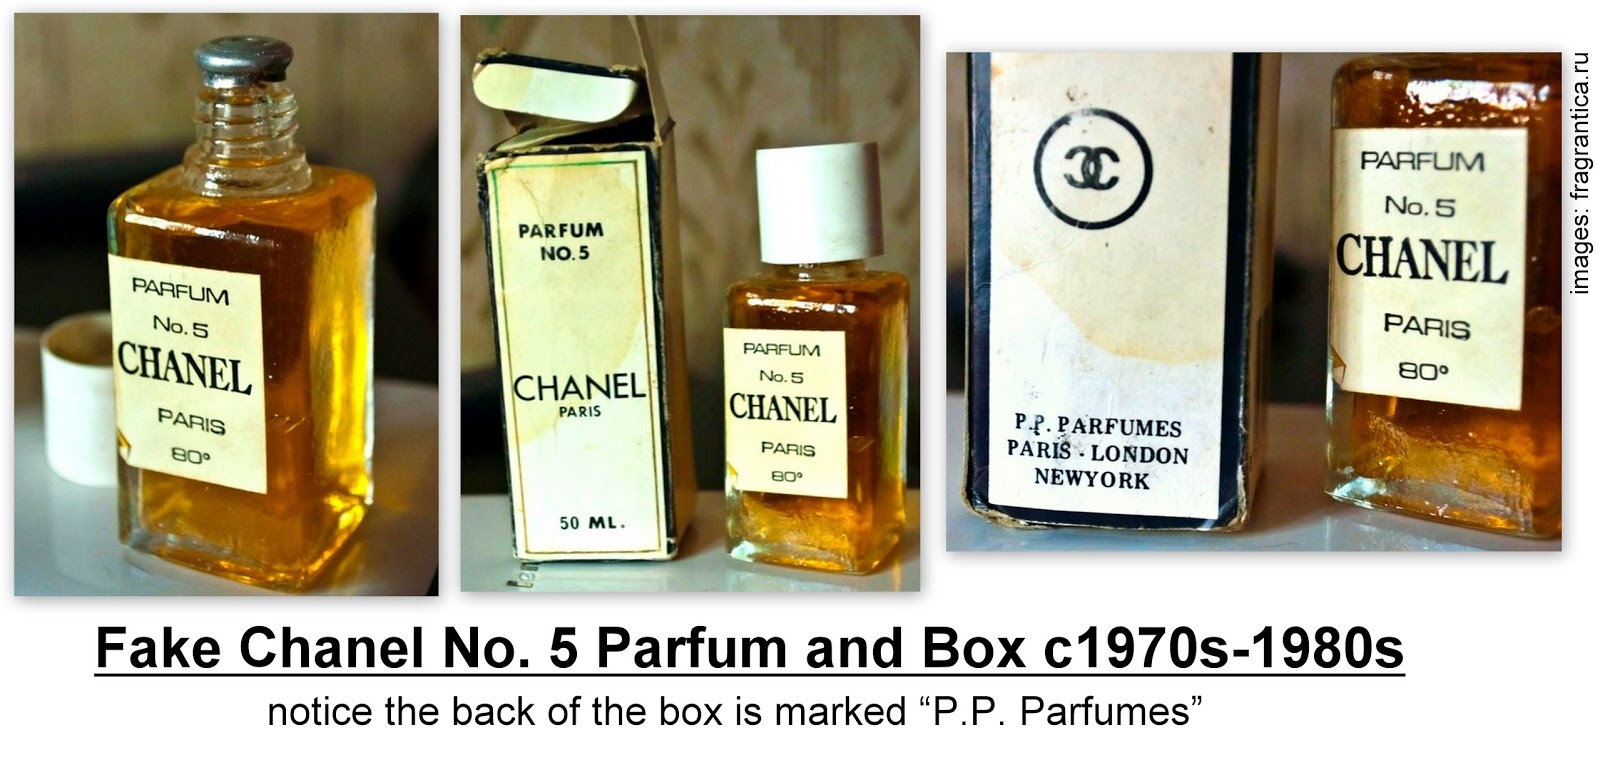 Chanel Perfume Bottles: Vintage 1970s-1980s Fake Chanel No. 5